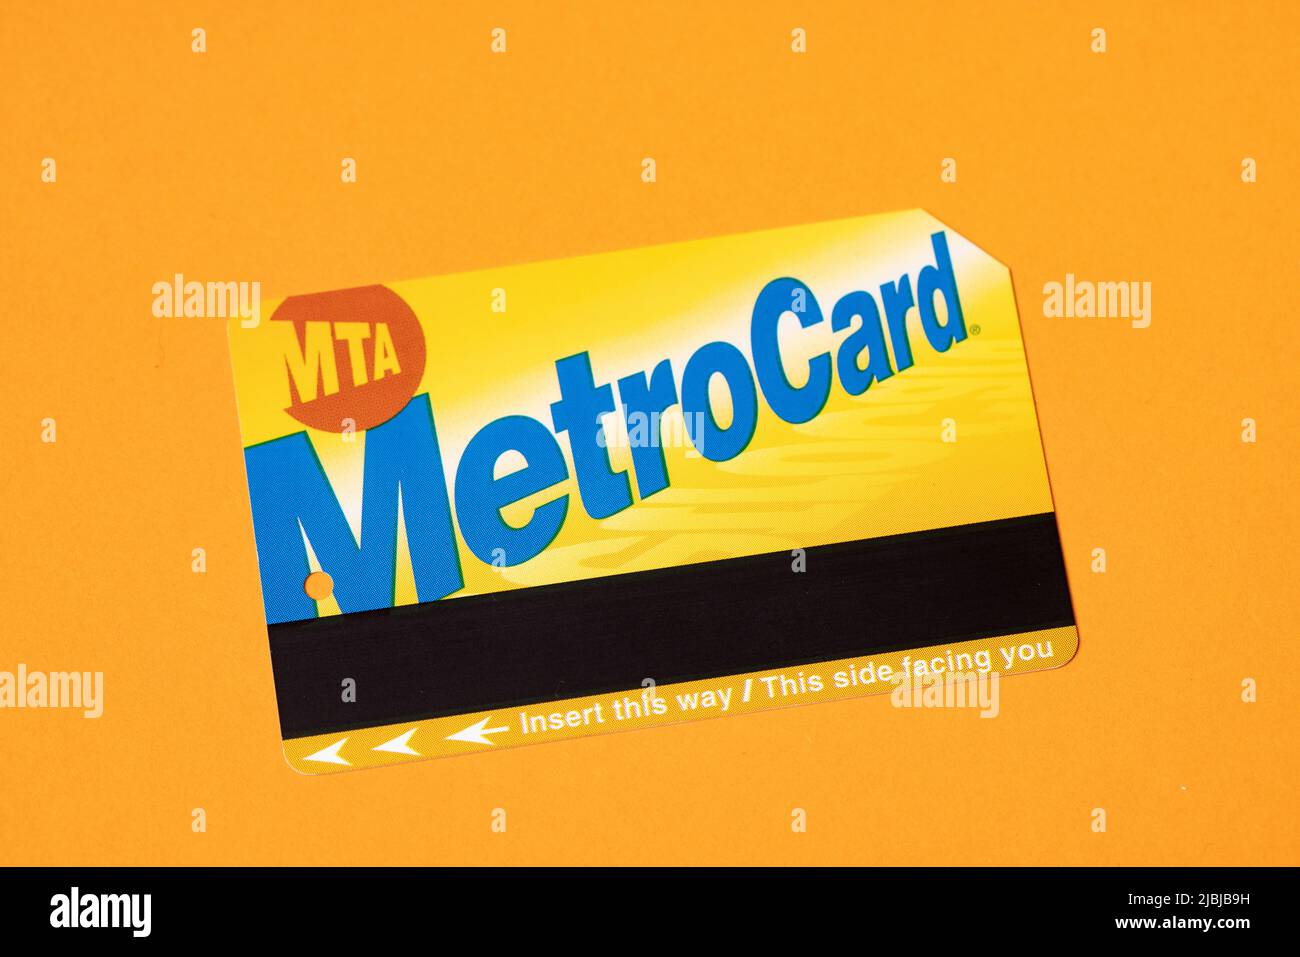 Manhattan, New York/USA - April 8. 2021: New York City Metrocard on orange background. Ticket for public transit in NYC Stock Photo